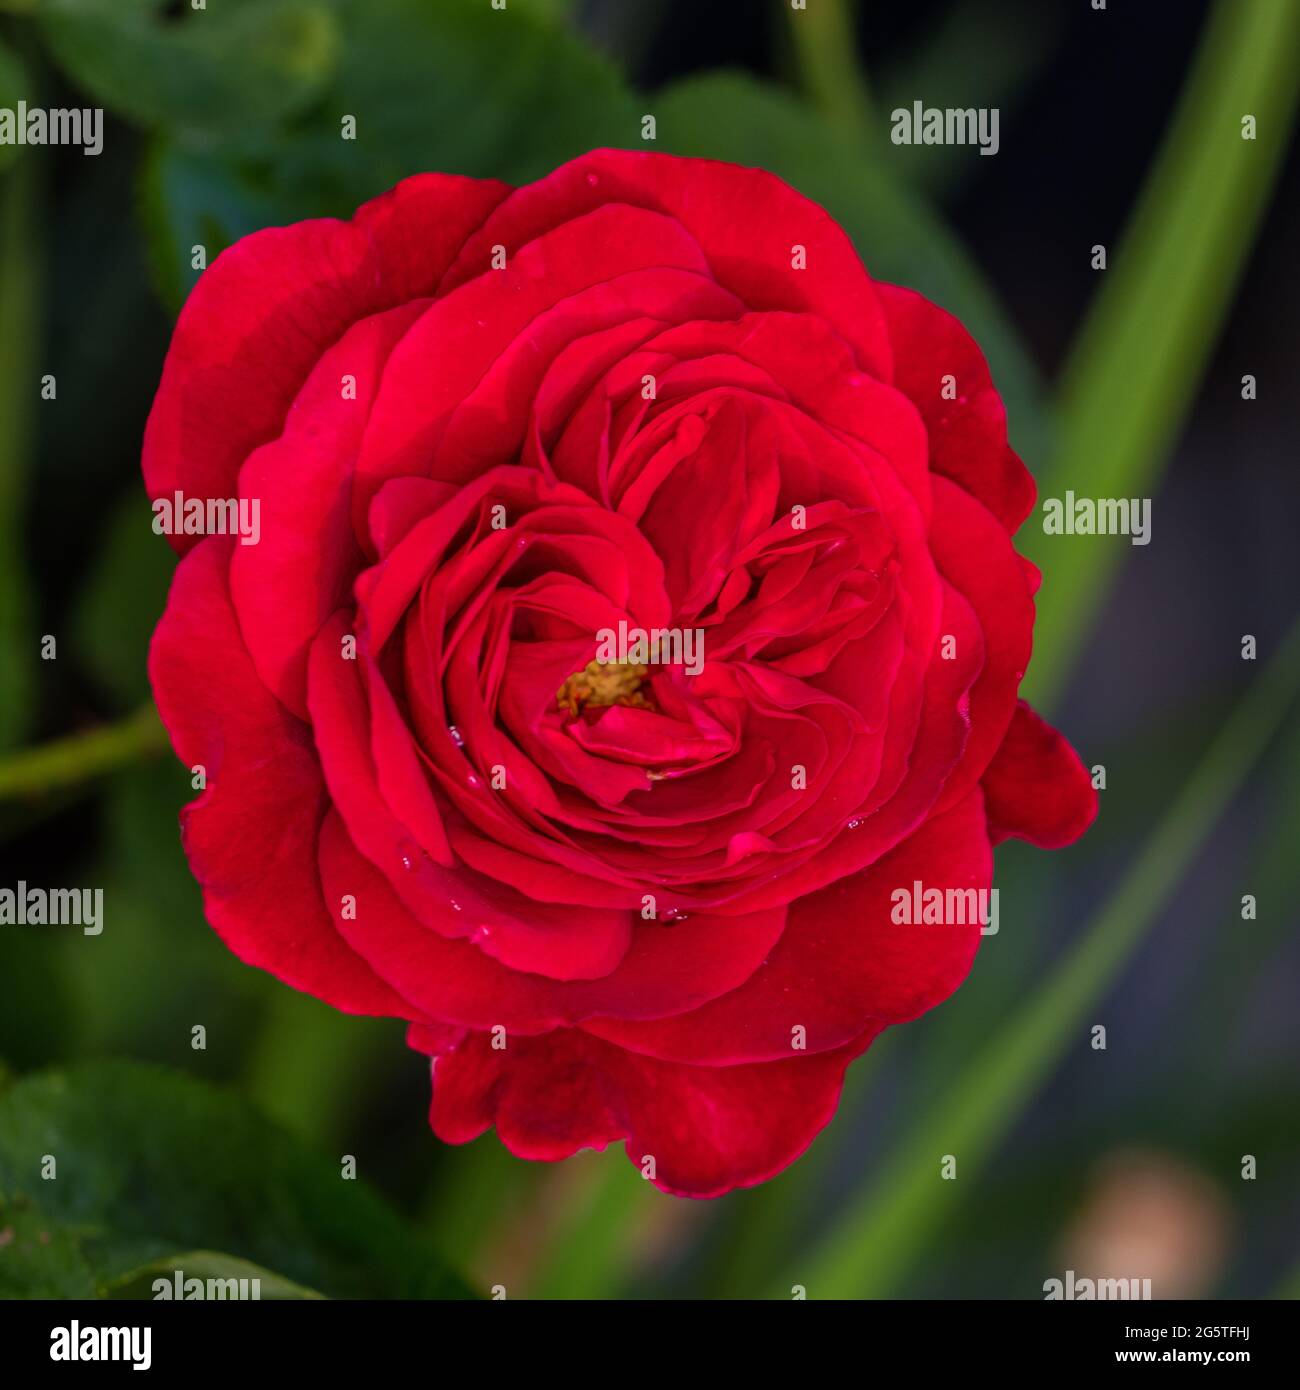 Braithwaite, Auscrim 'LD' English Rose, fransk ros (Rosa) Banque D'Images